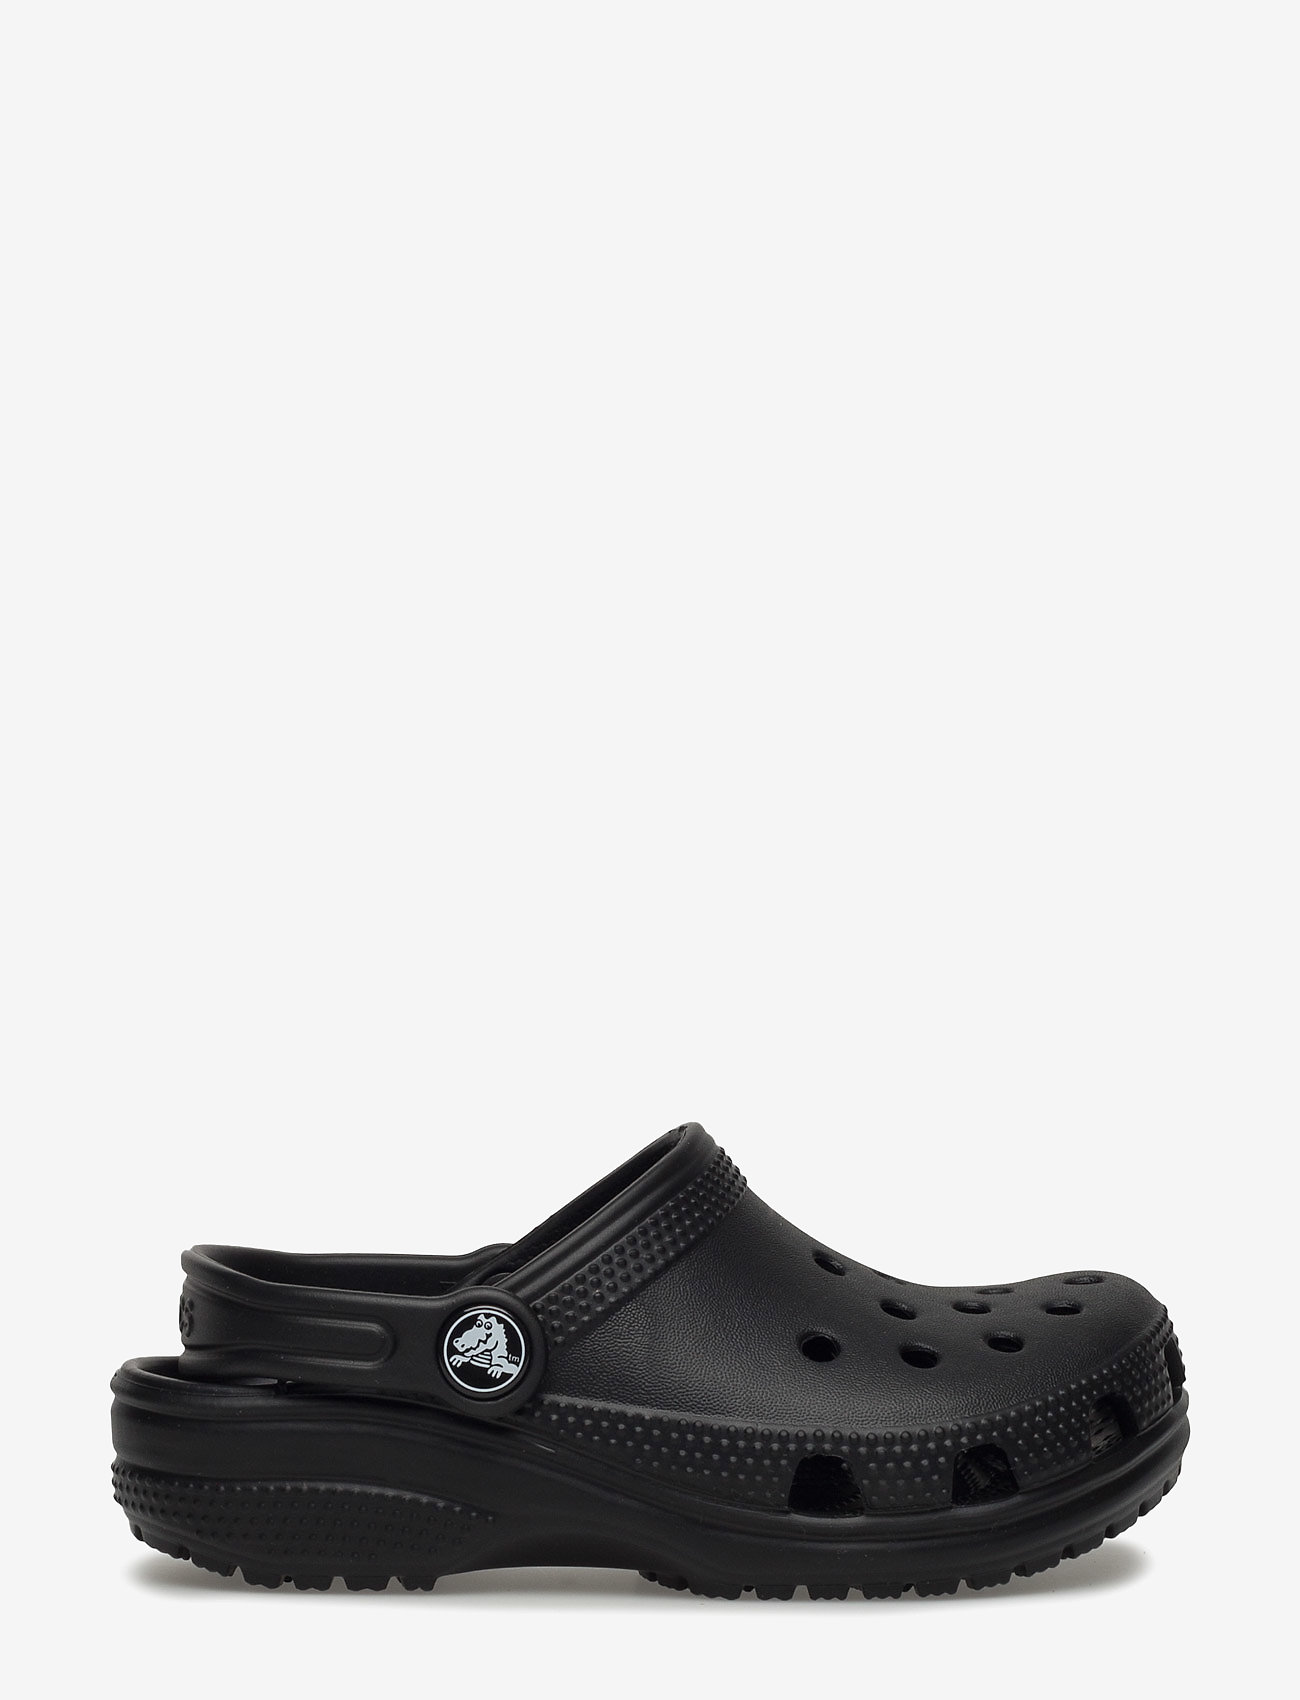 classic crocs black